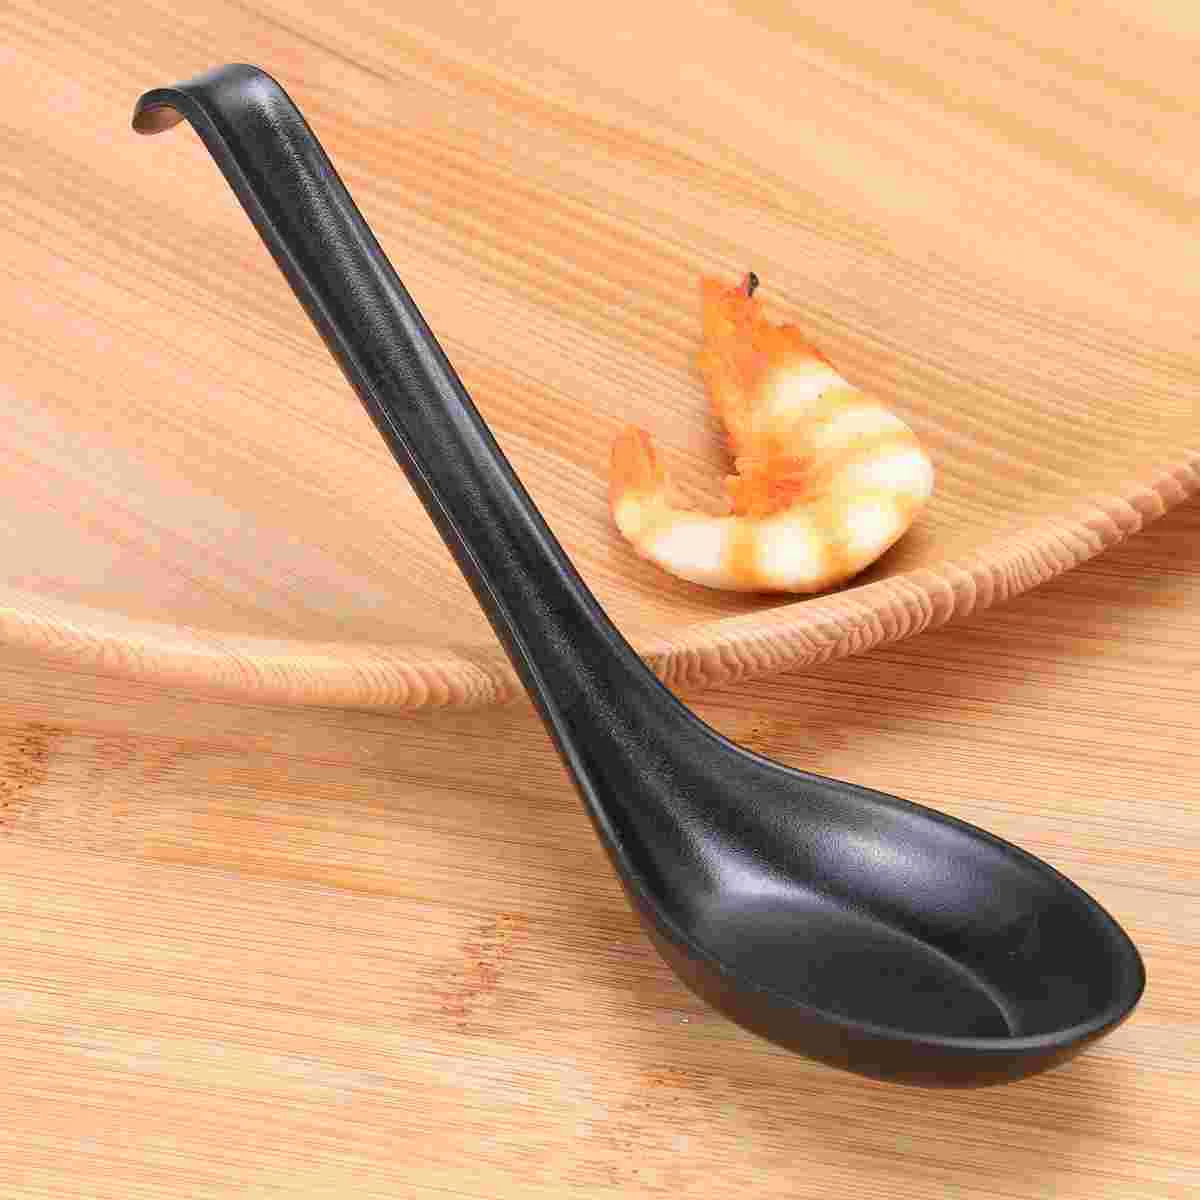 

Spoons Soup Spoon Japanese Melamine Chinese Noodle Rice Ton Won Ramen Soba Cream Decorative Hookhandleasian Coffee Ice Dinner